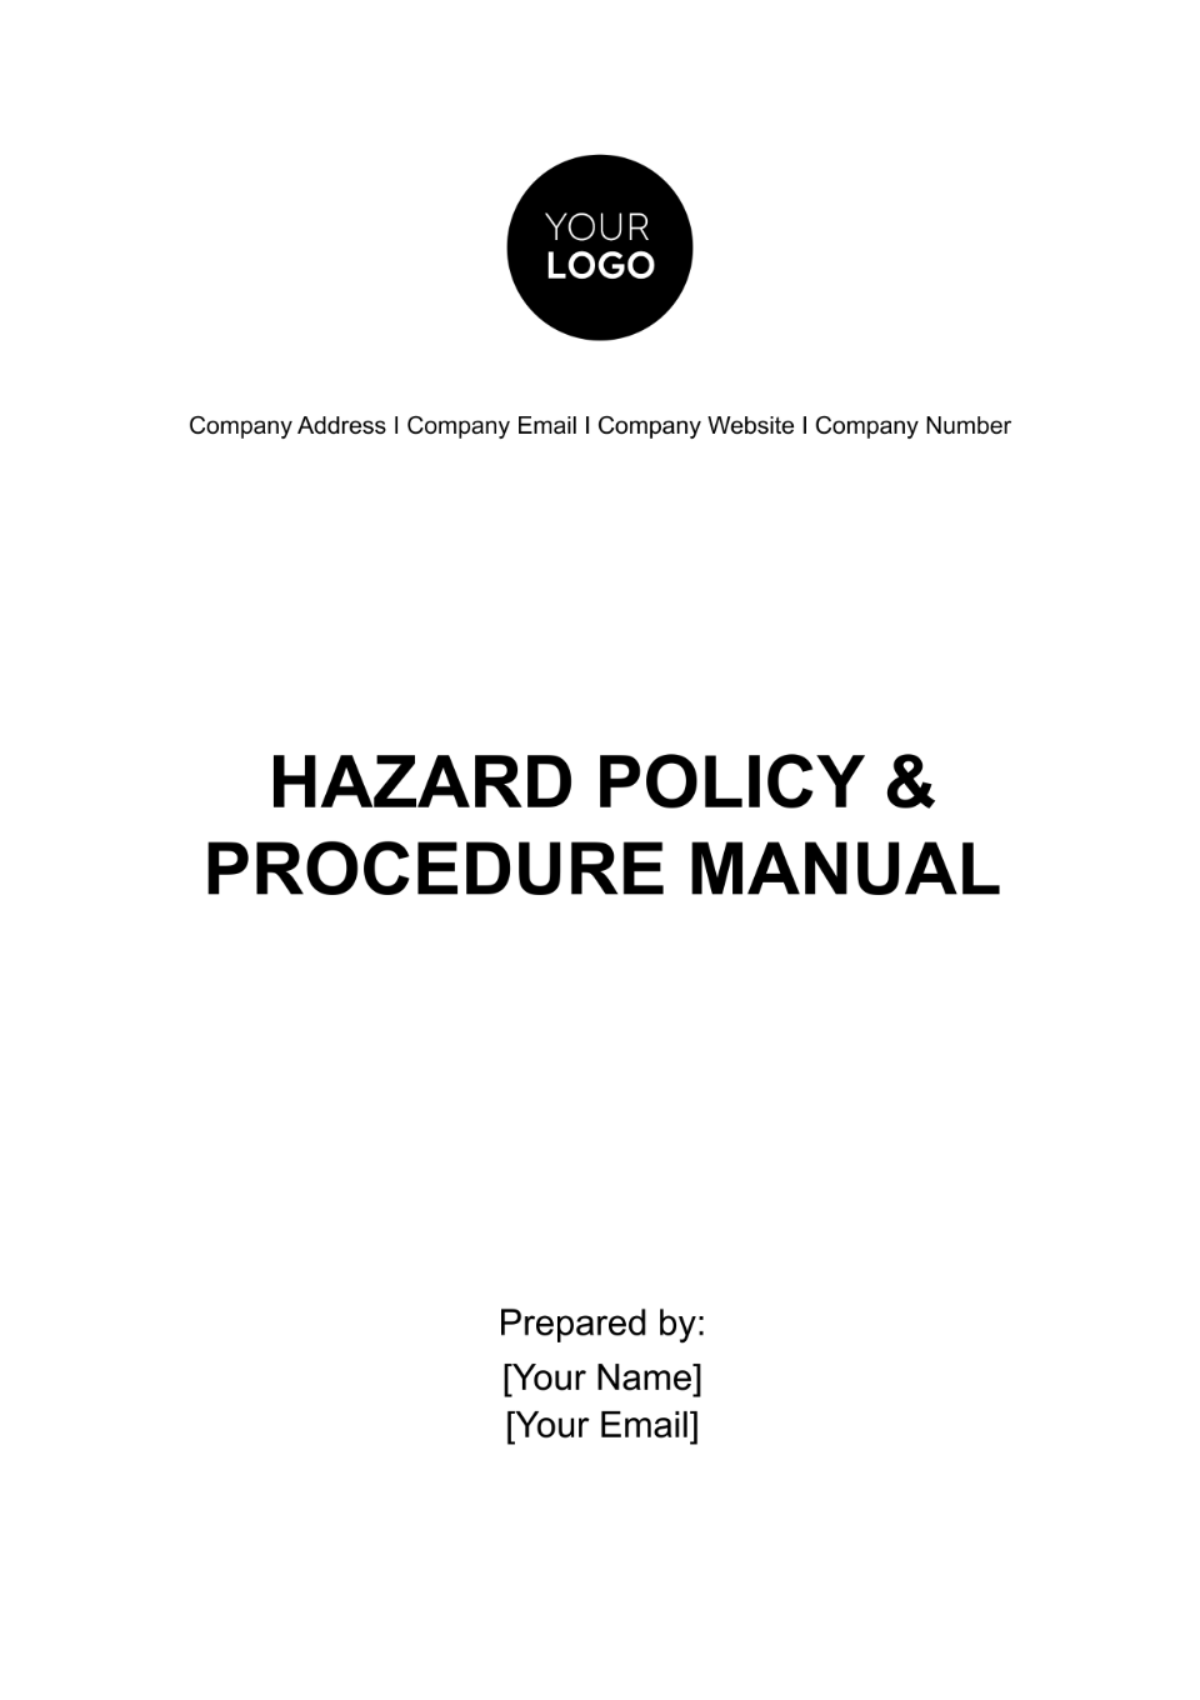 Hazard Policy & Procedure Manual Template